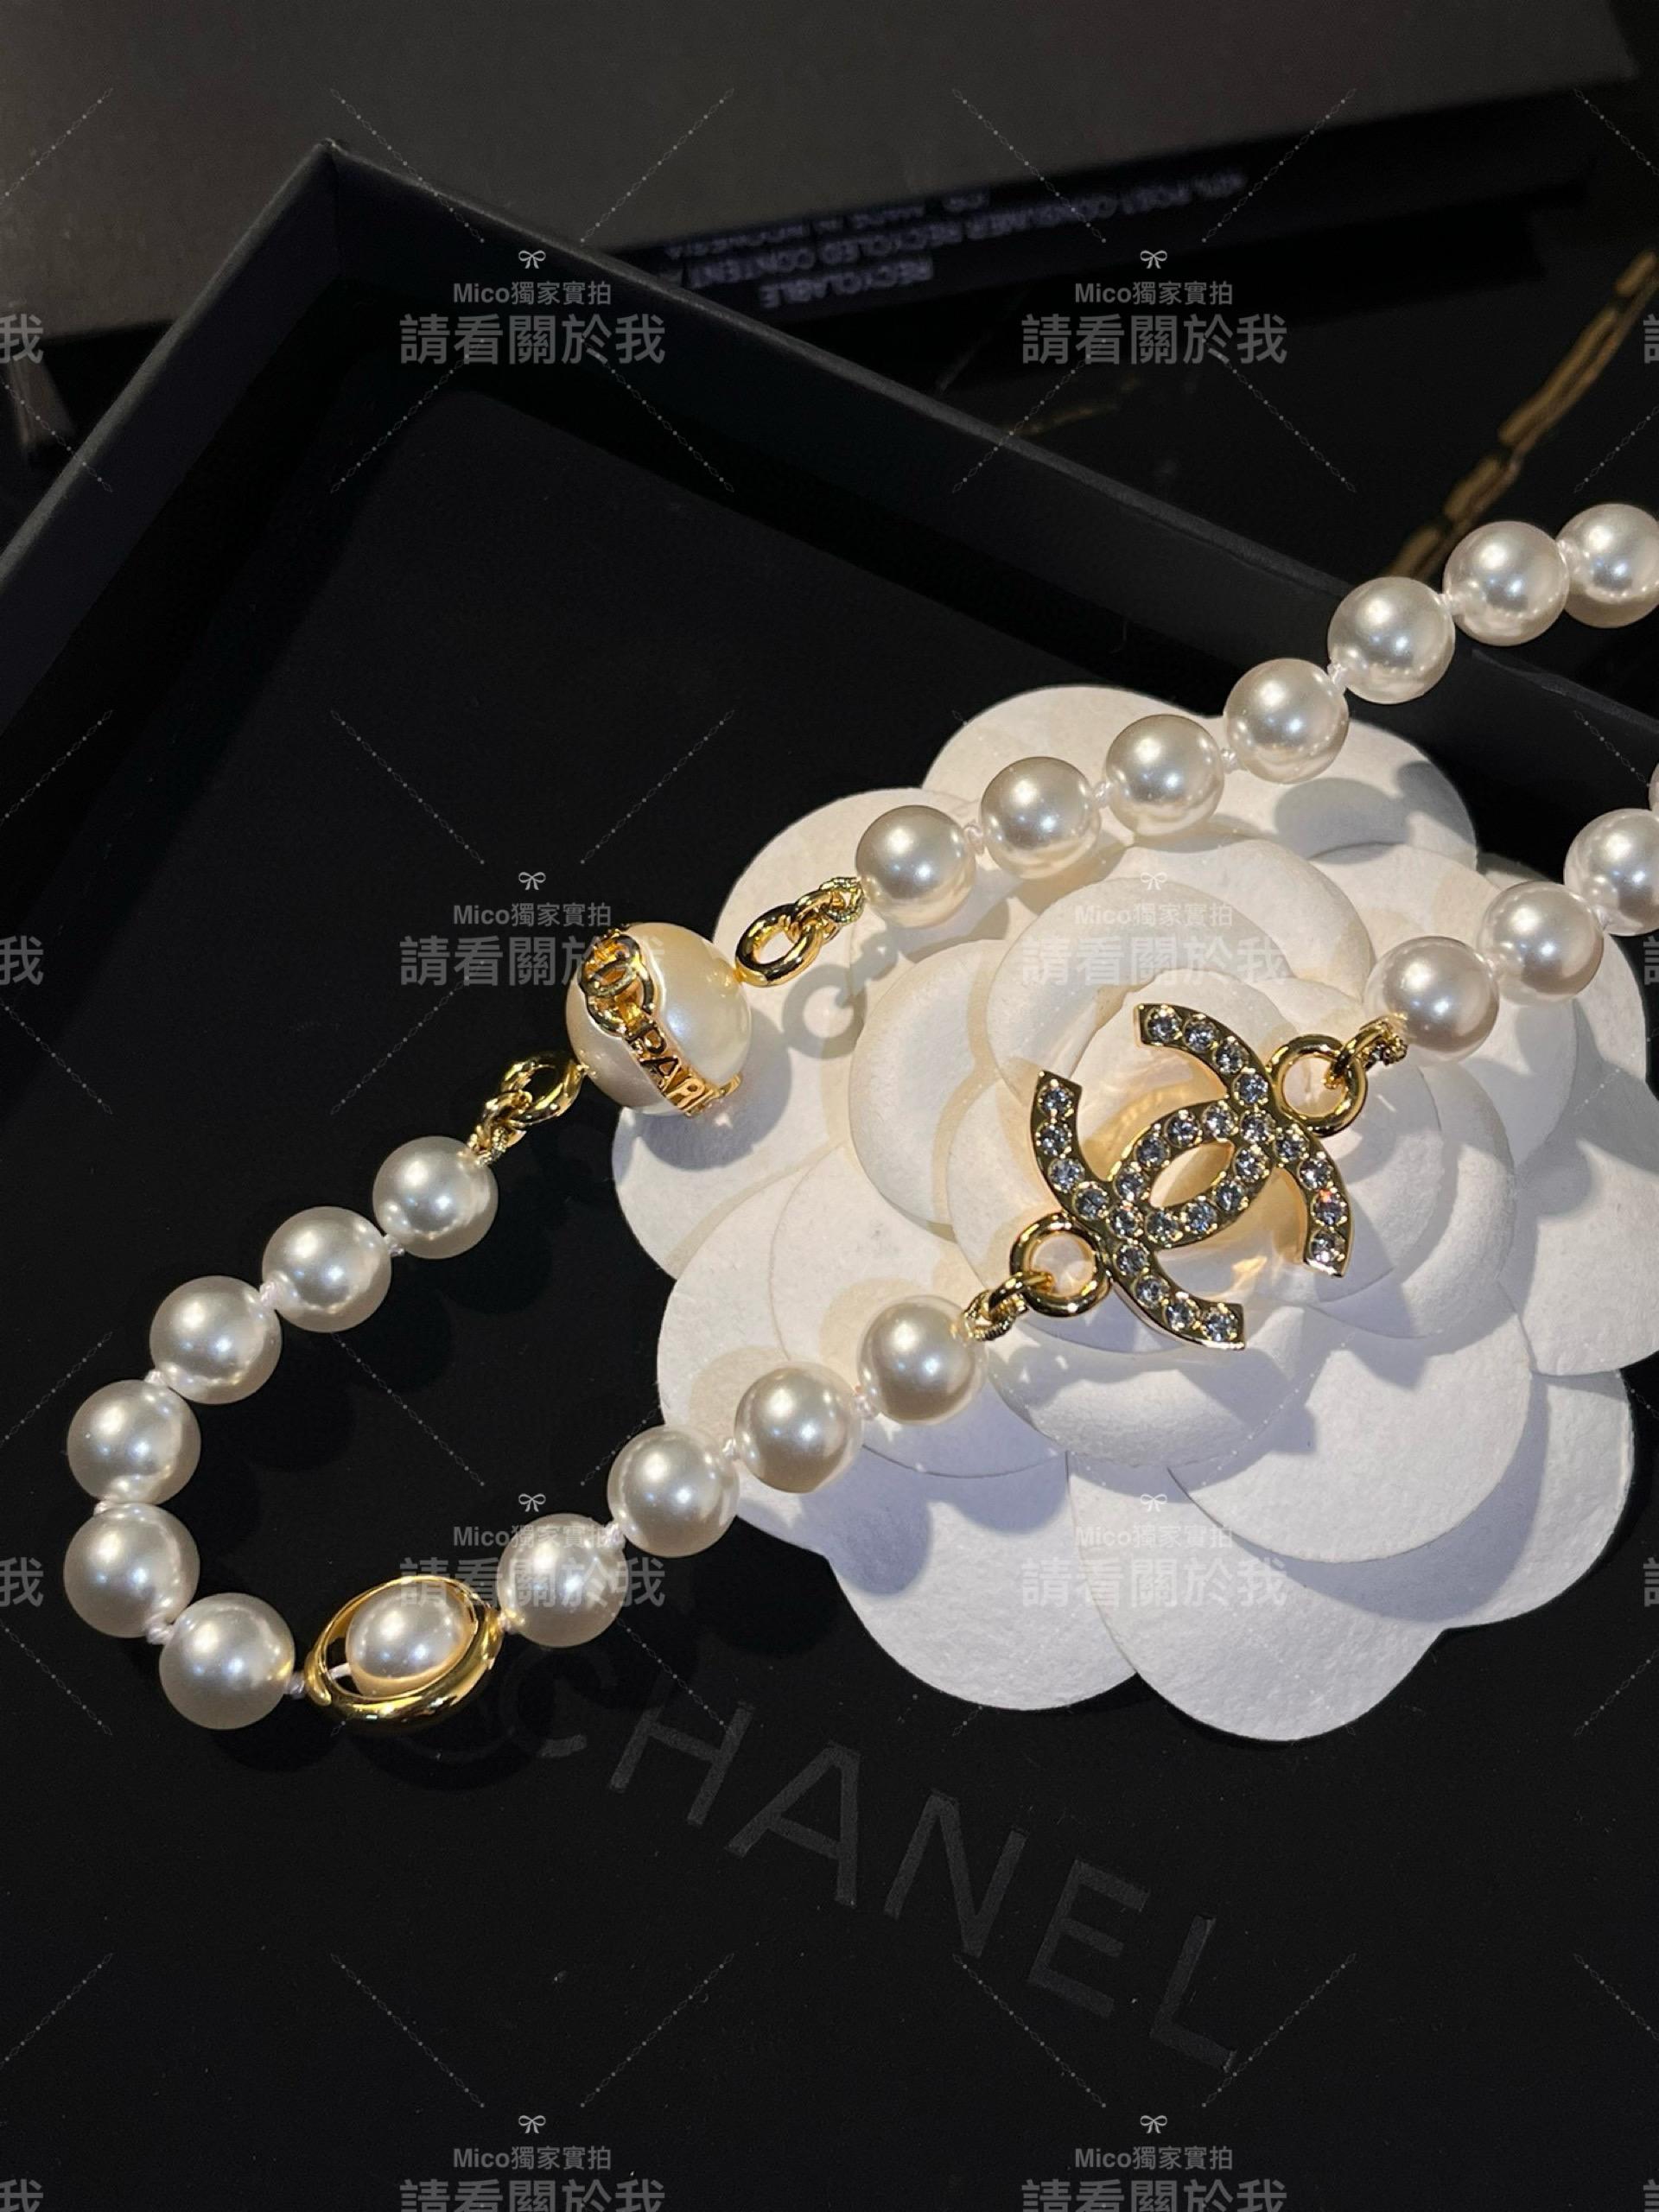 Chanel 半鏤空字母滿鑽雙C珍珠項鍊choker